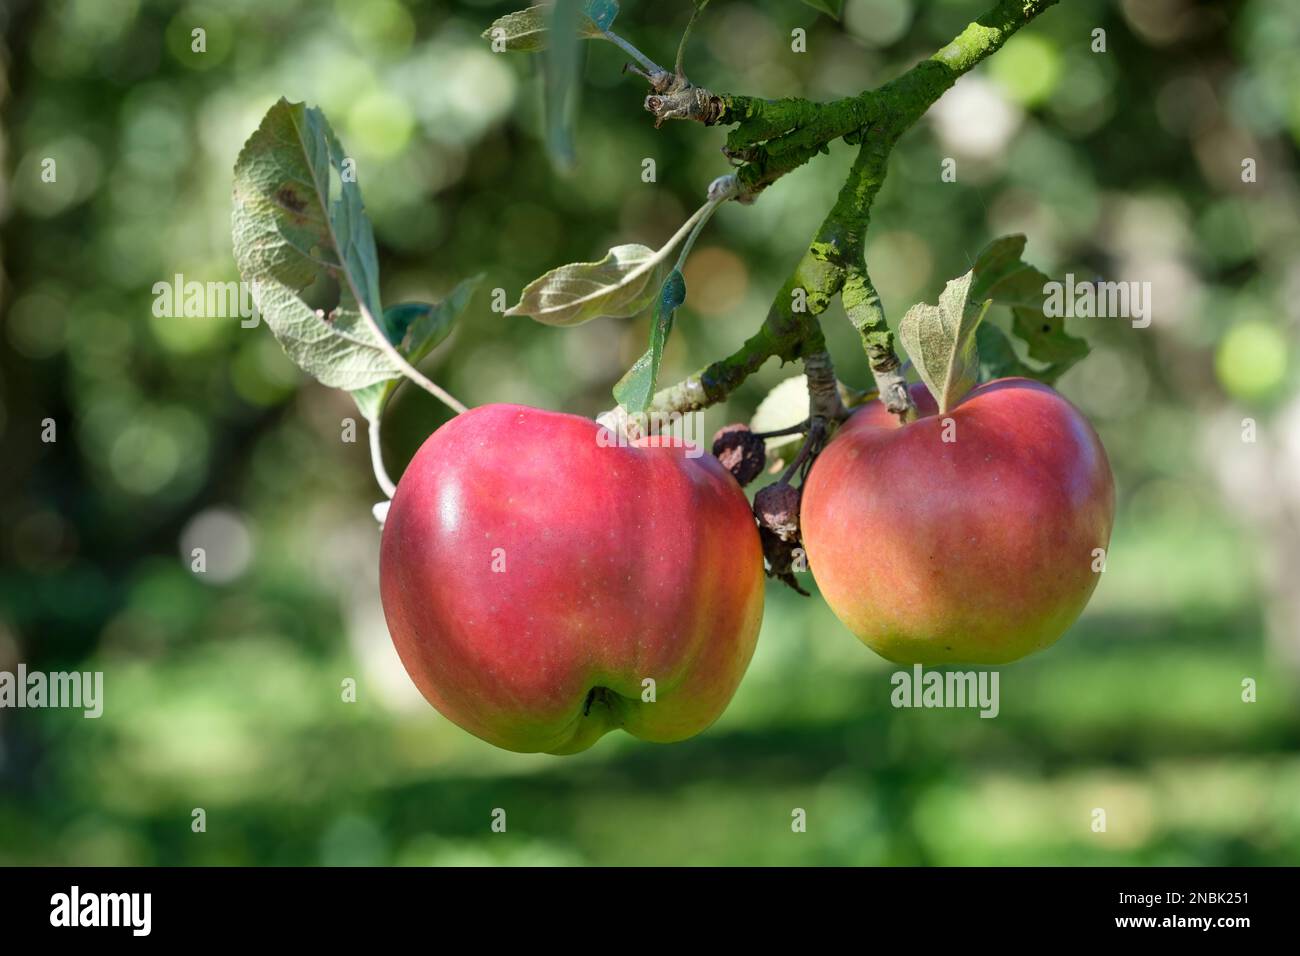 Malus domestica Hollandbury, Apple Hollandbury, mele che crescono in un frutteto inglese Foto Stock